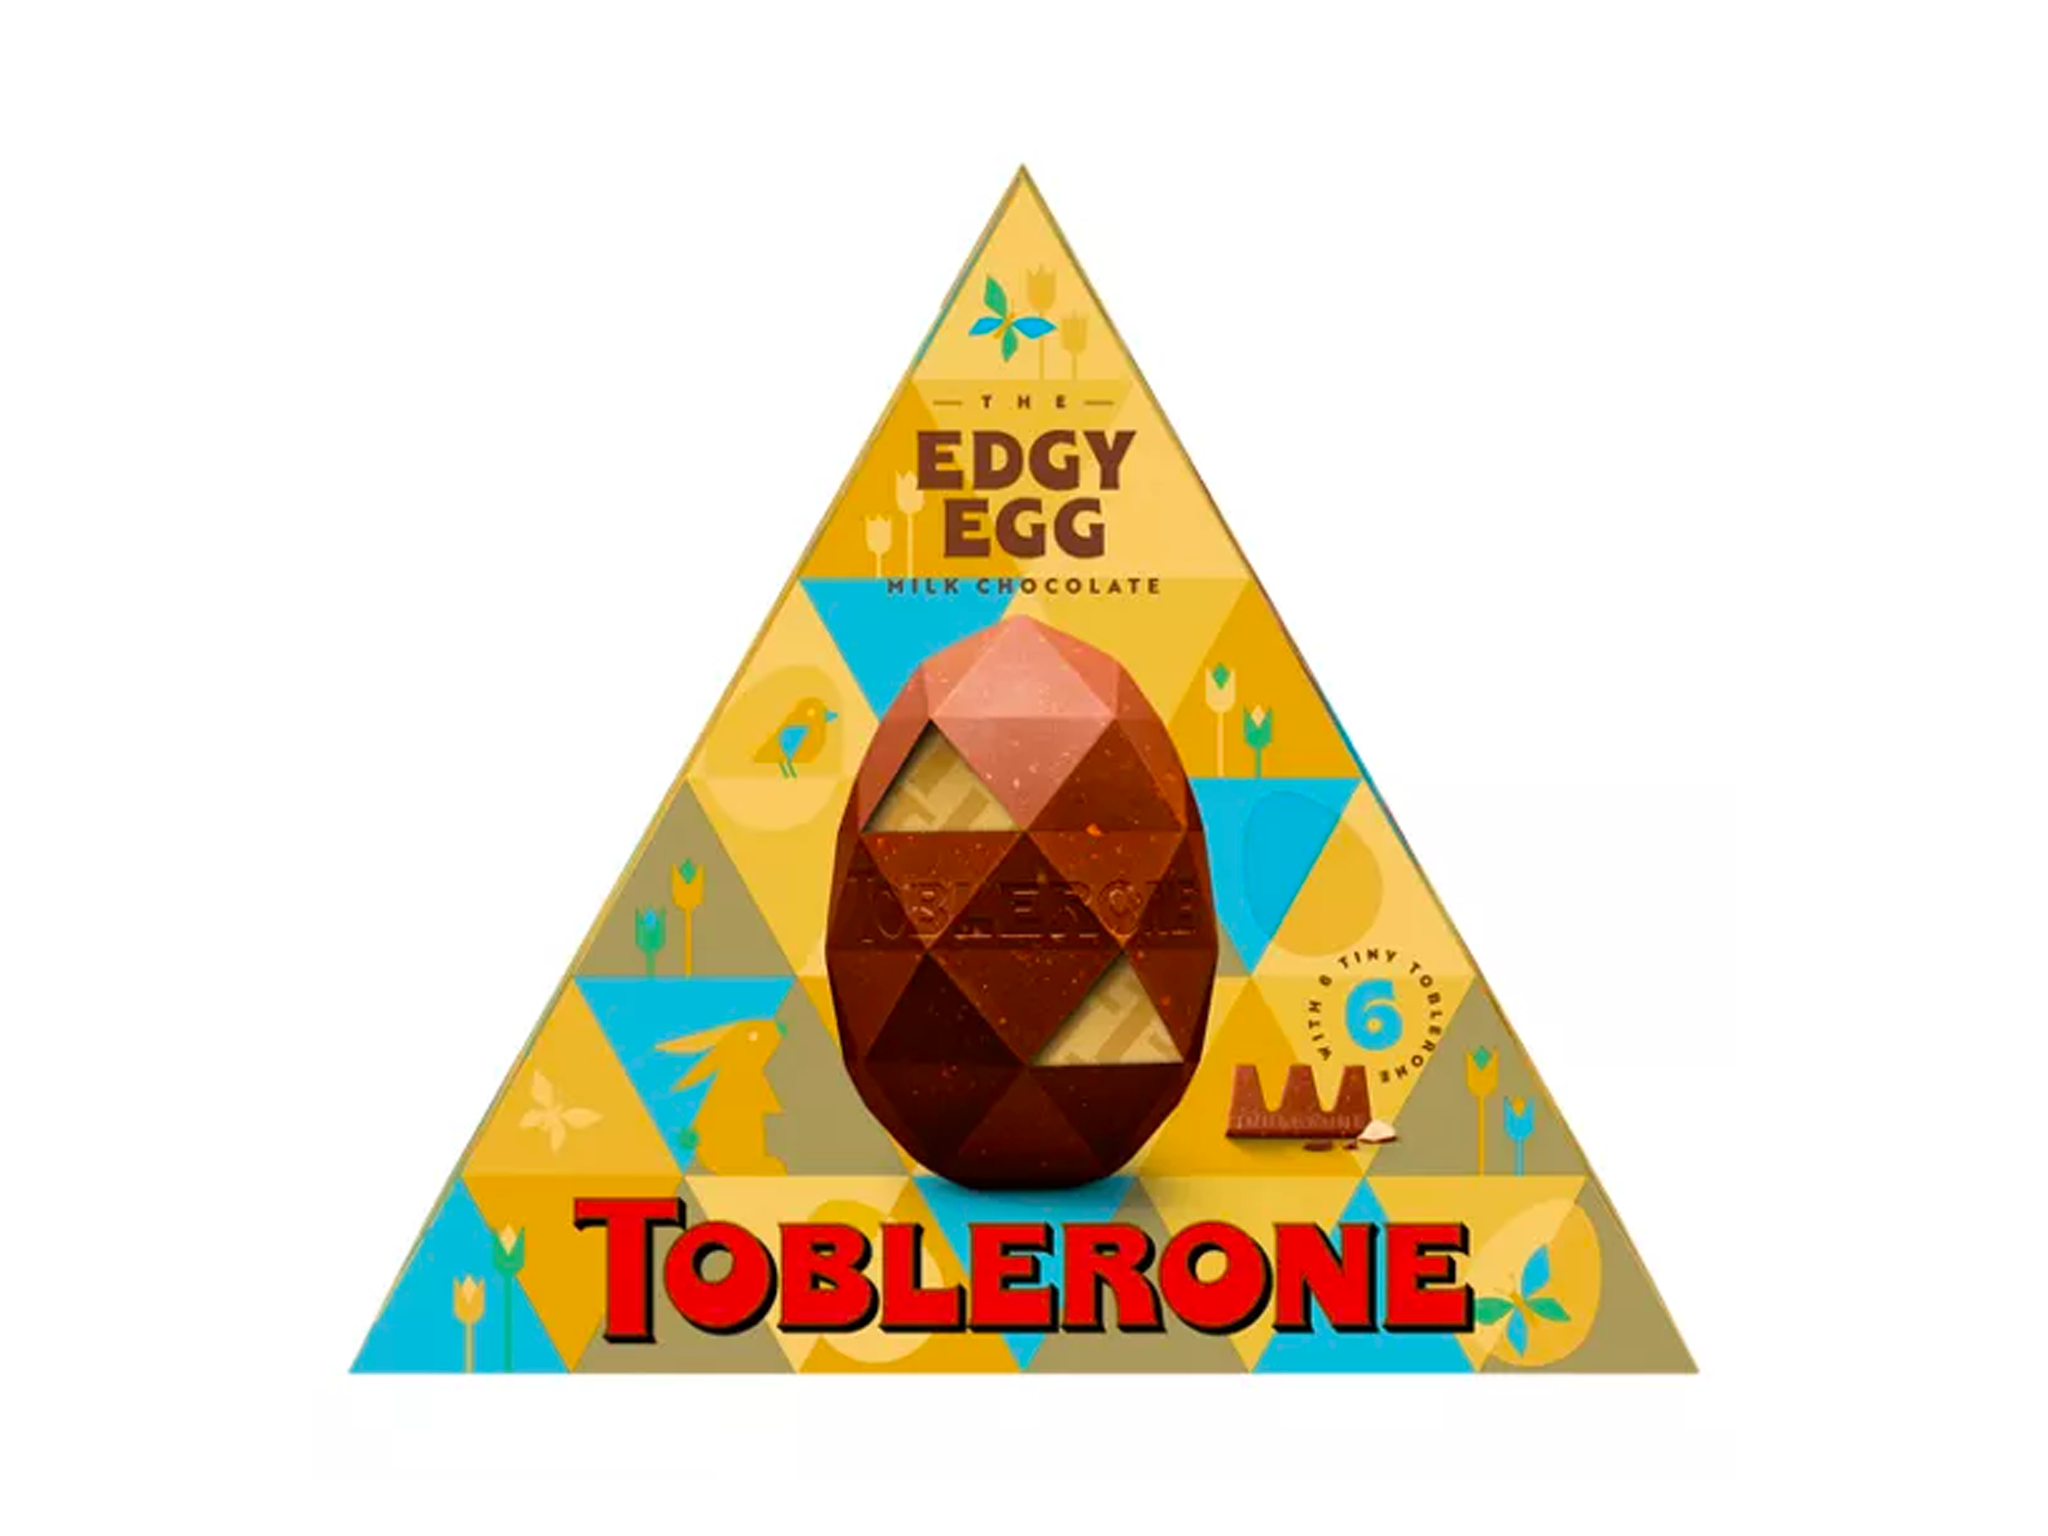 Toblerone-edgy-egg-indybest